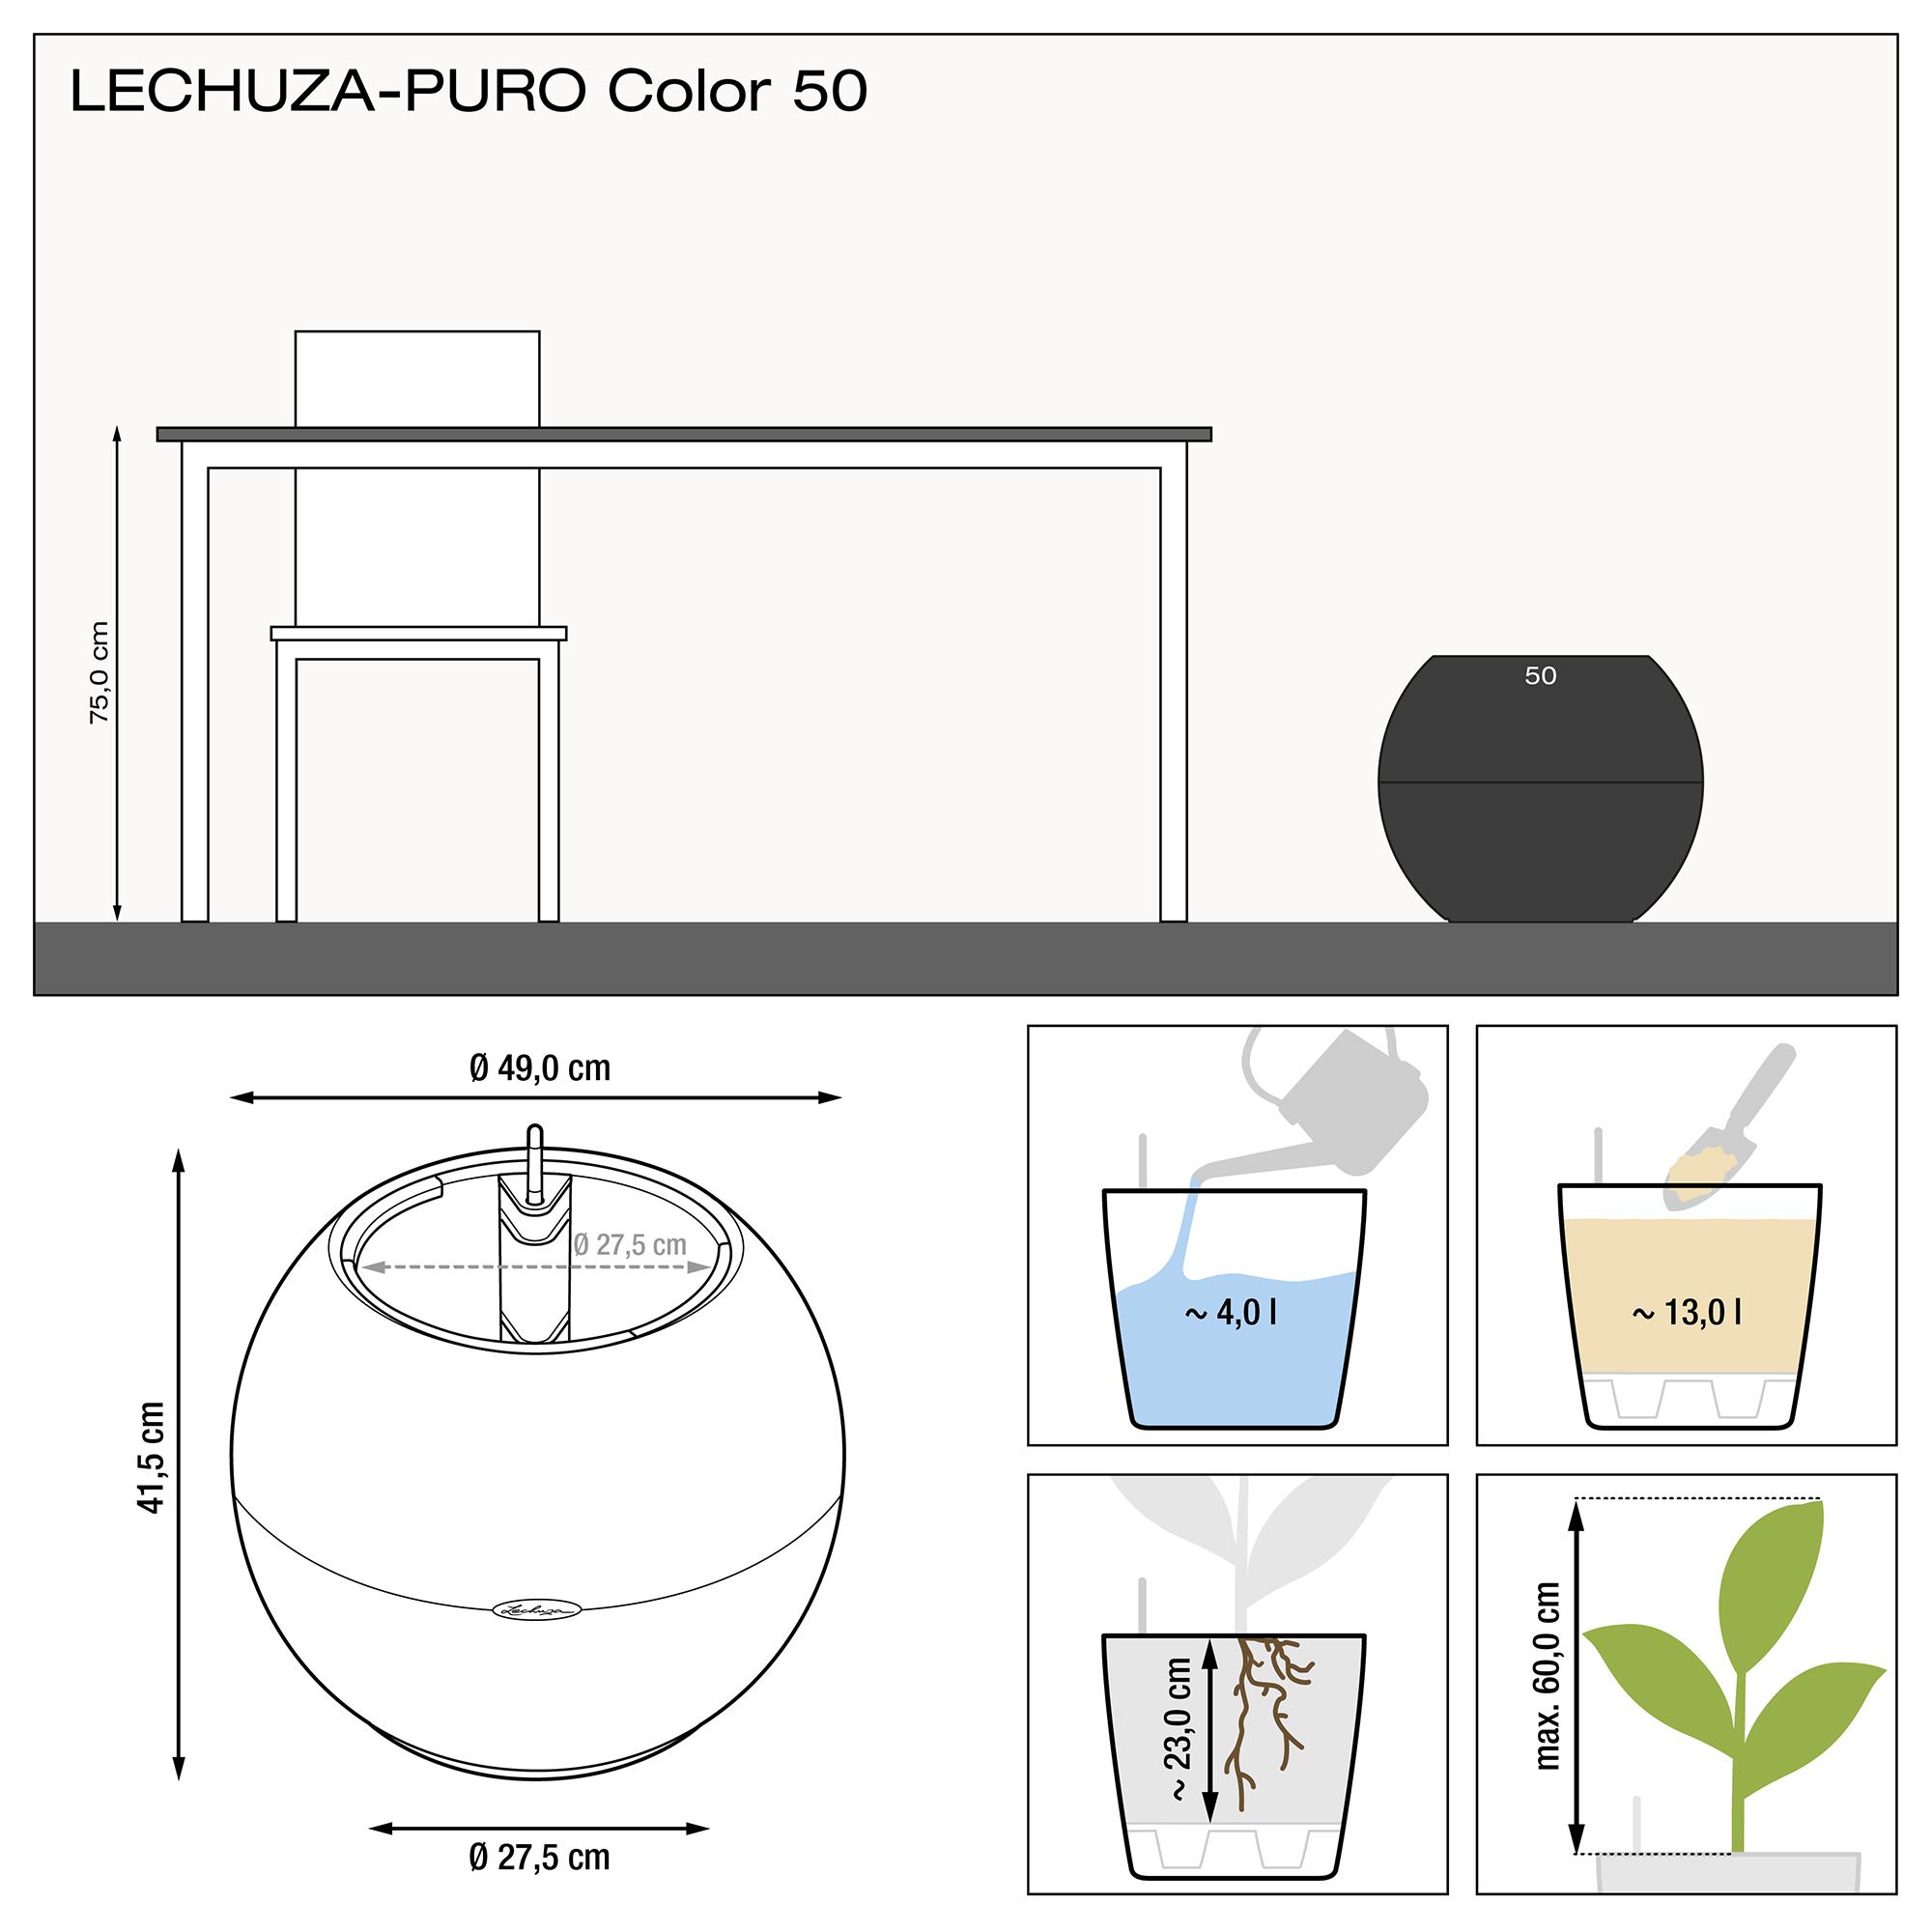 le_puro-color50_product_addi_nz Thumb